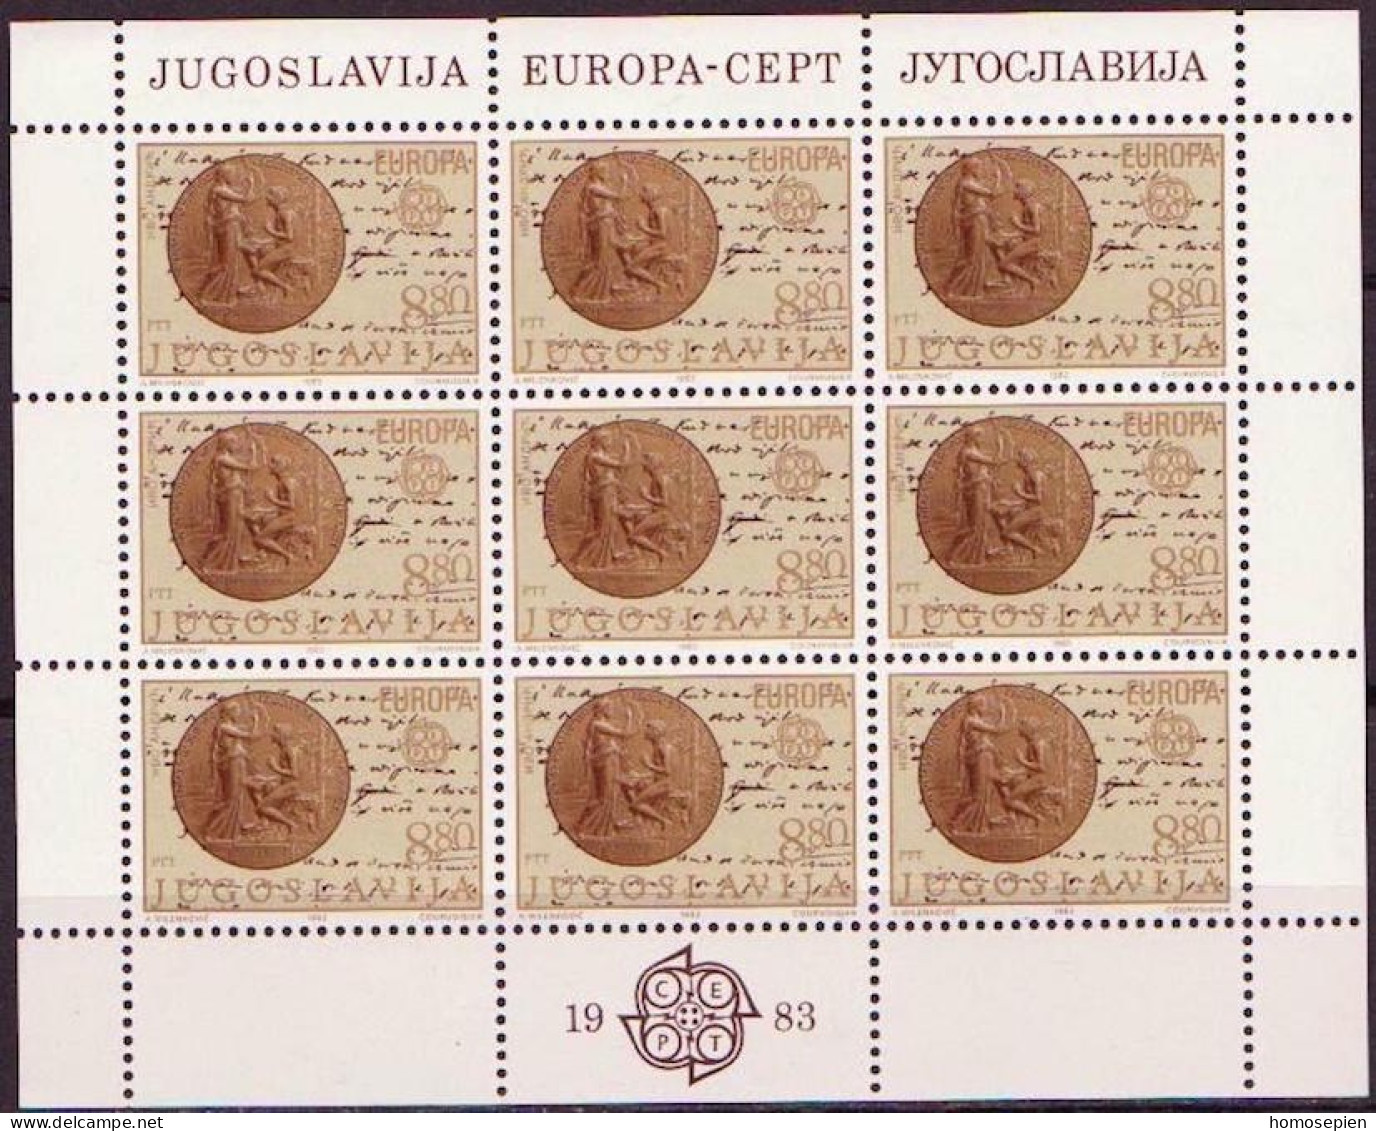 Europa CEPT 1983 Yougoslavie - Jugoslawien - Yugoslavia Y&T N°F1866 à F1867 - Michel N°KB1984 à KB1985 *** - 1983